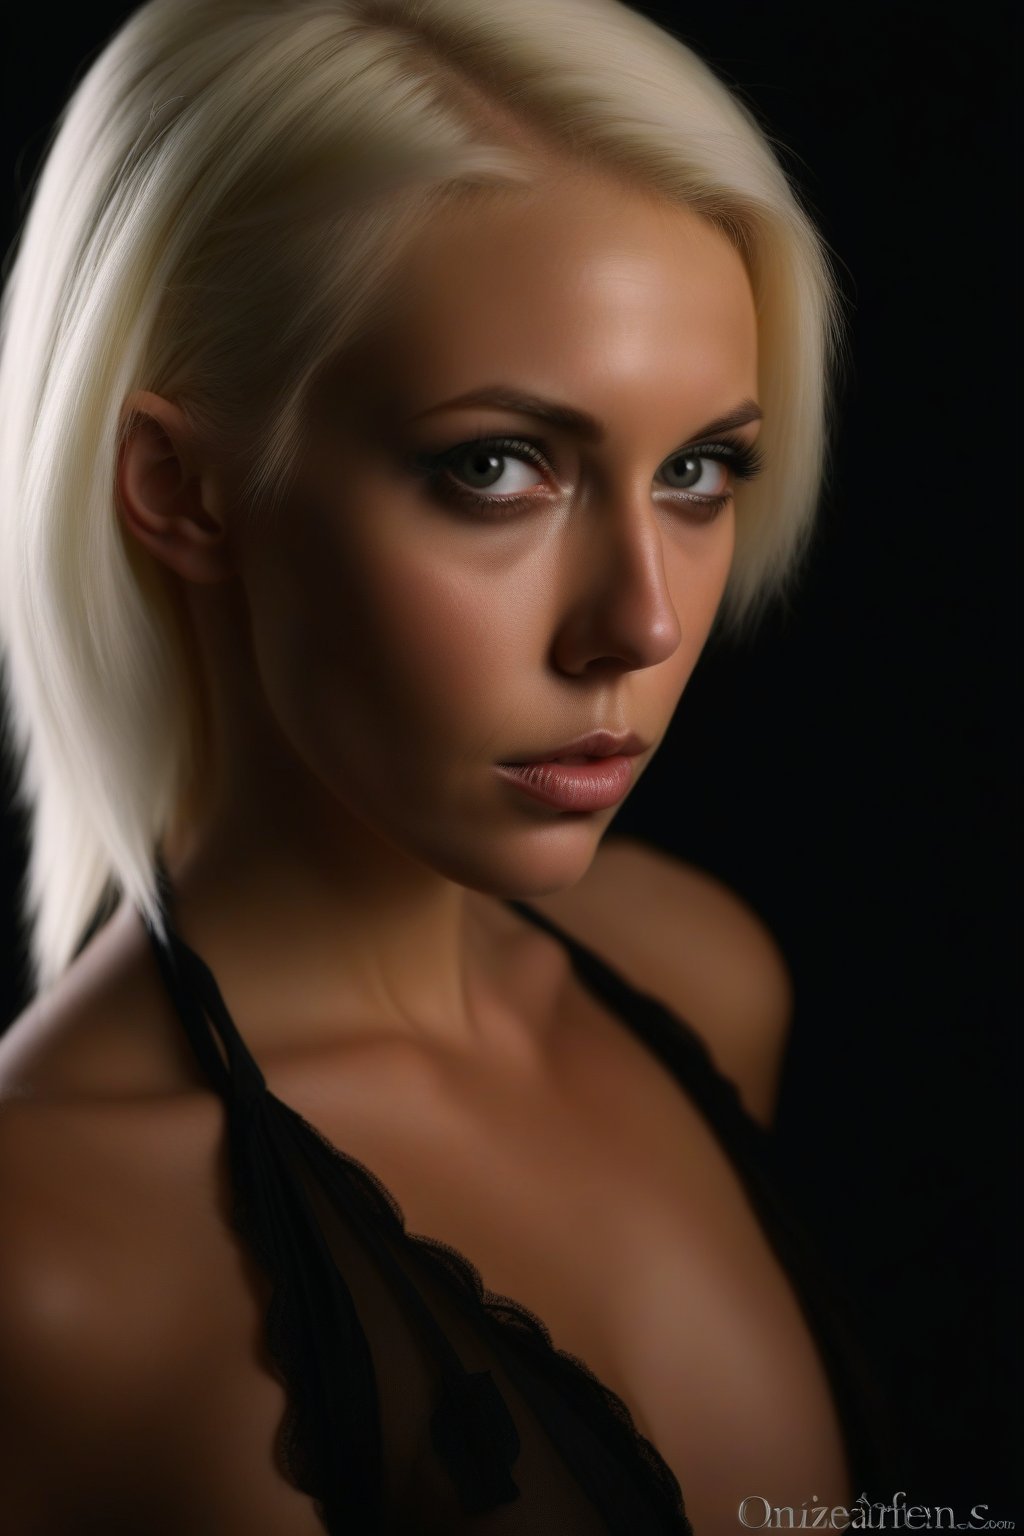 1girl, platinum blonde, sexy, microbikini, dark background, chiaroscuro, moody light, 
studio portrait by Suze Randall, Hasselblad 500c, masterpiece, 